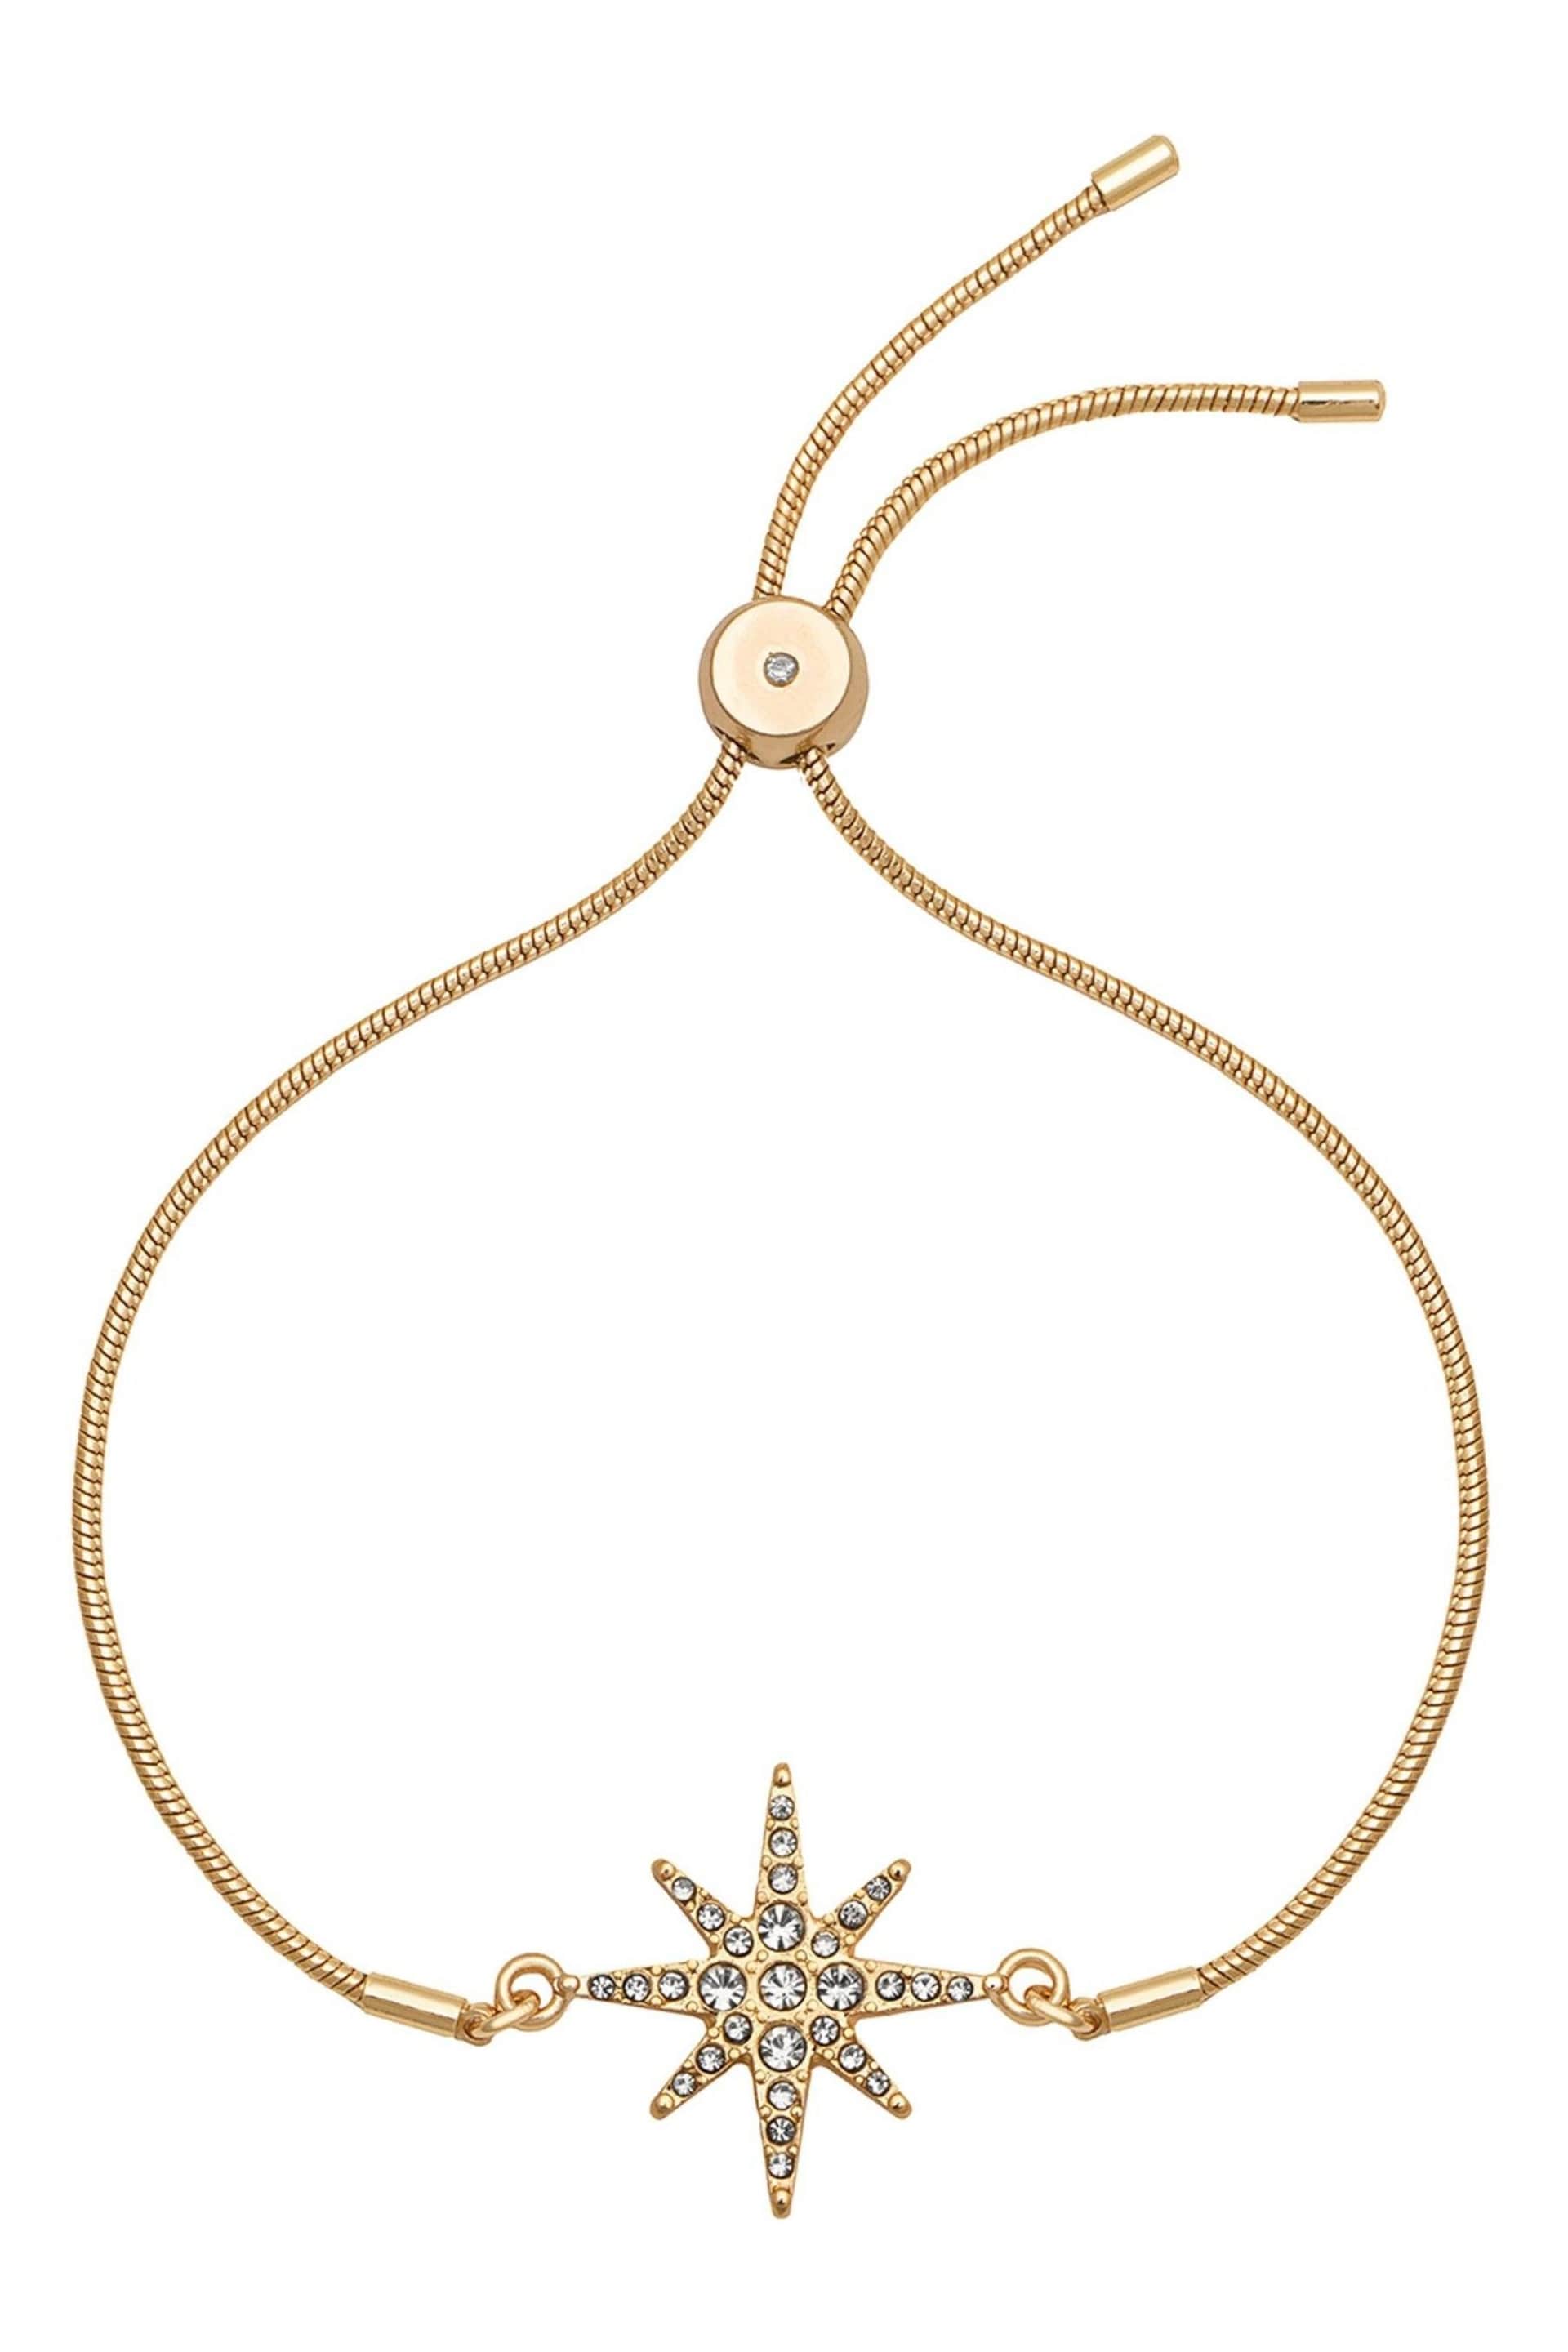 Caramel Jewellery London Gold 'Superstar' Bracelet - Image 2 of 3